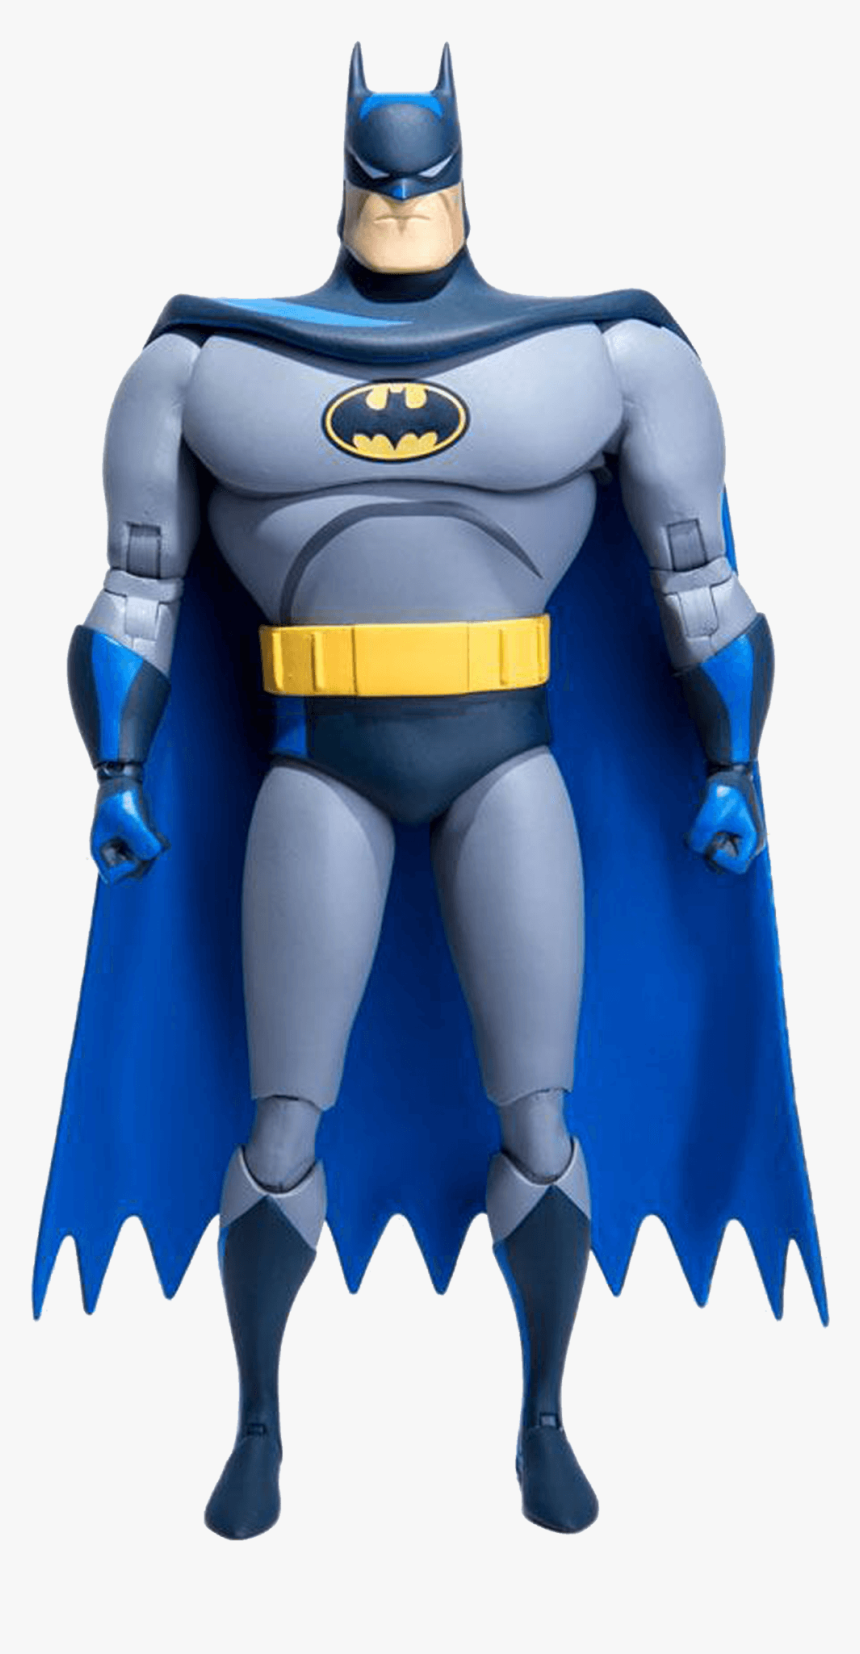 Batman The Animated Series Batman Figure, HD Png Download, Free Download